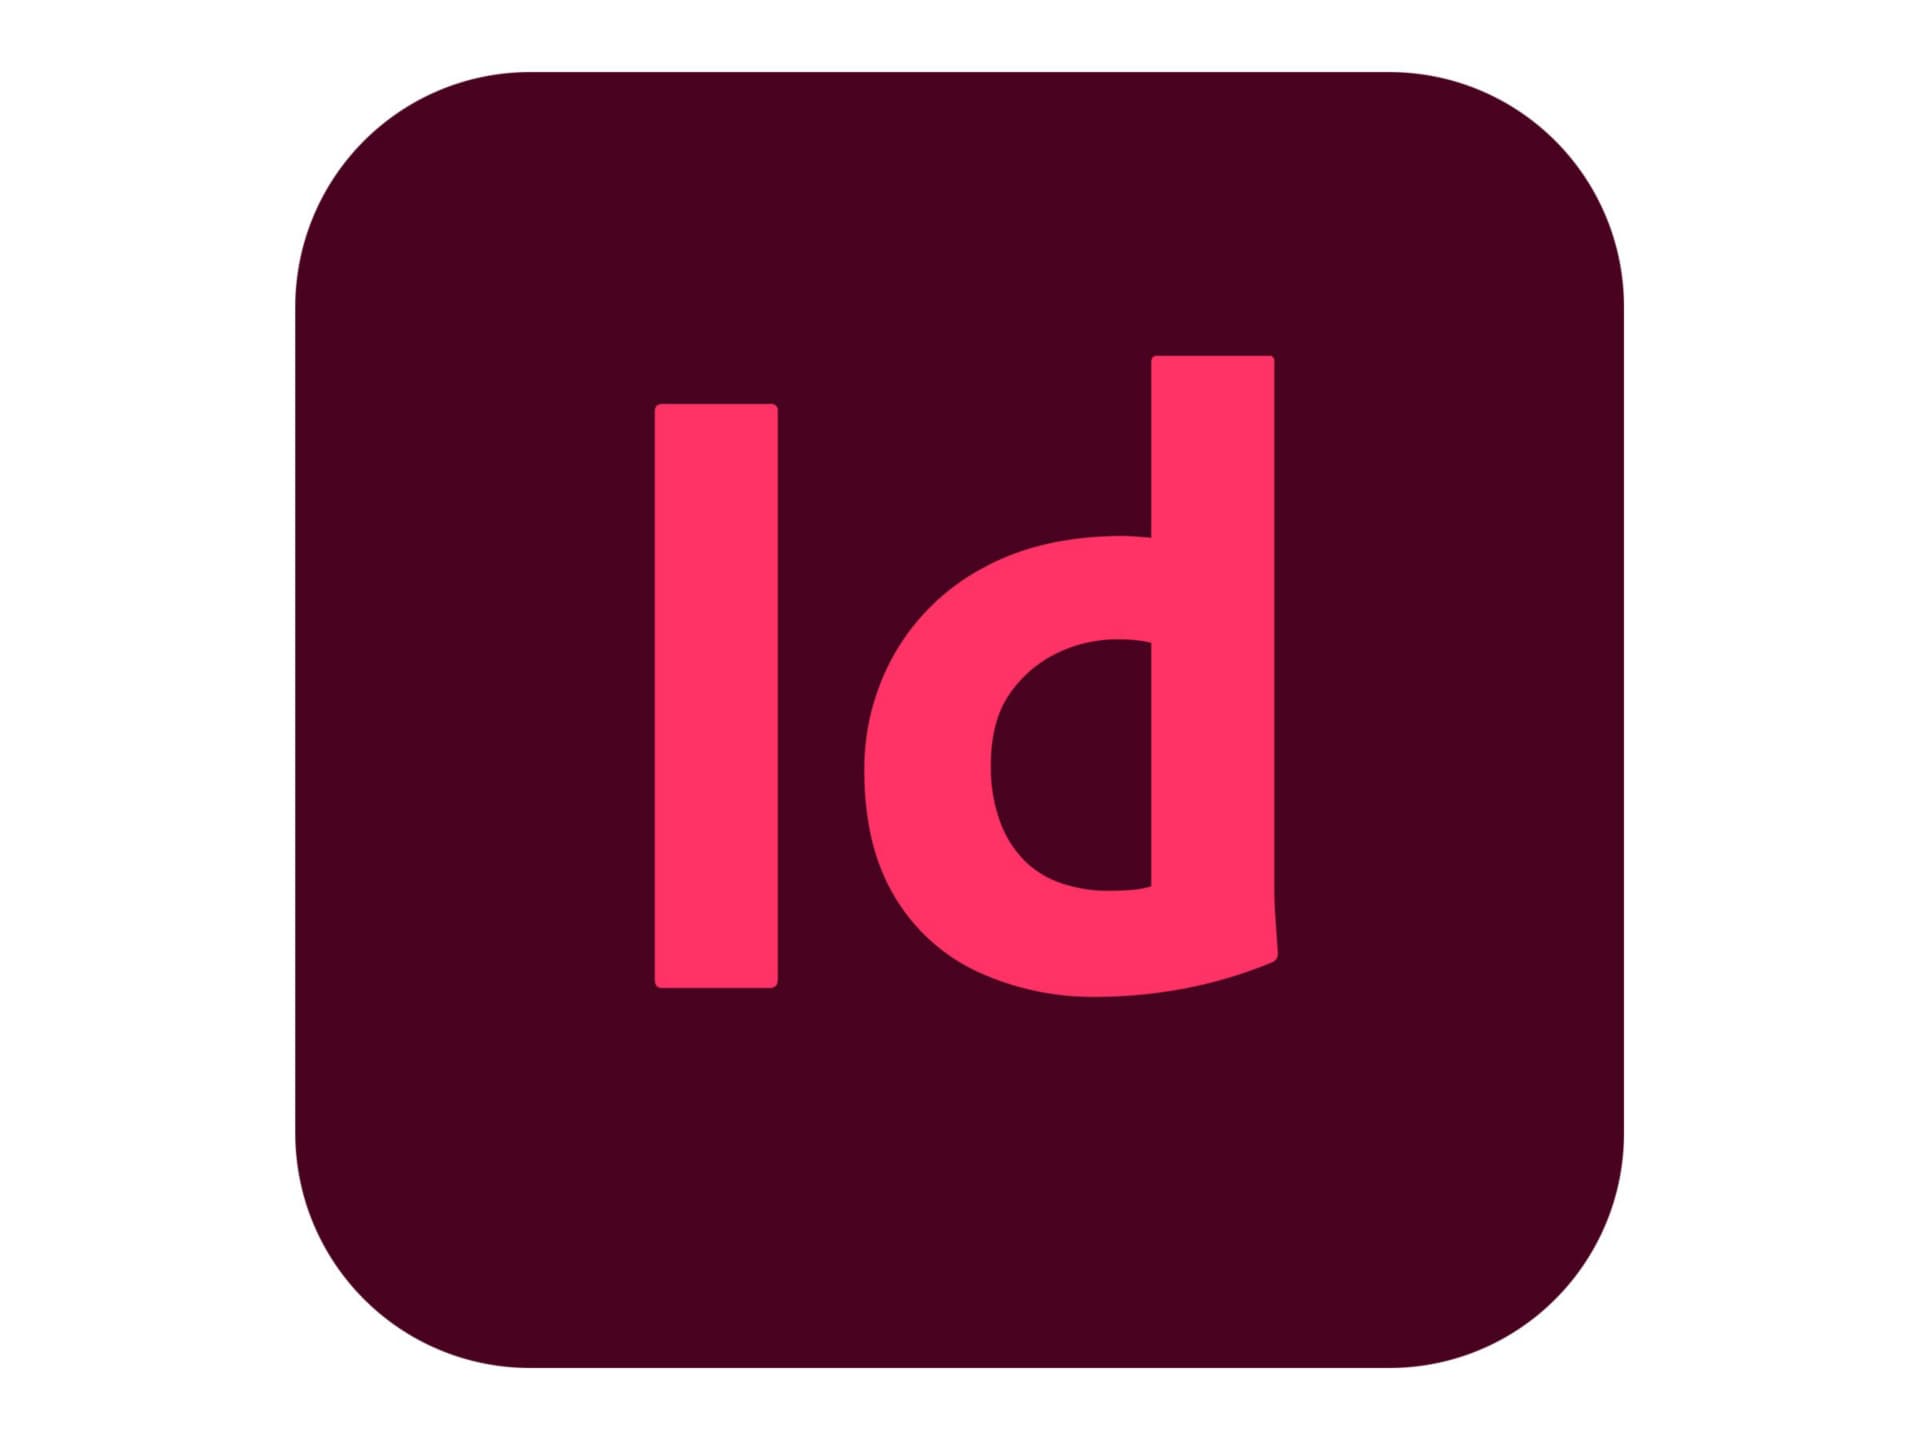 Adobe InDesign CC for Enterprise - Subscription New (2 months) - 1 named user